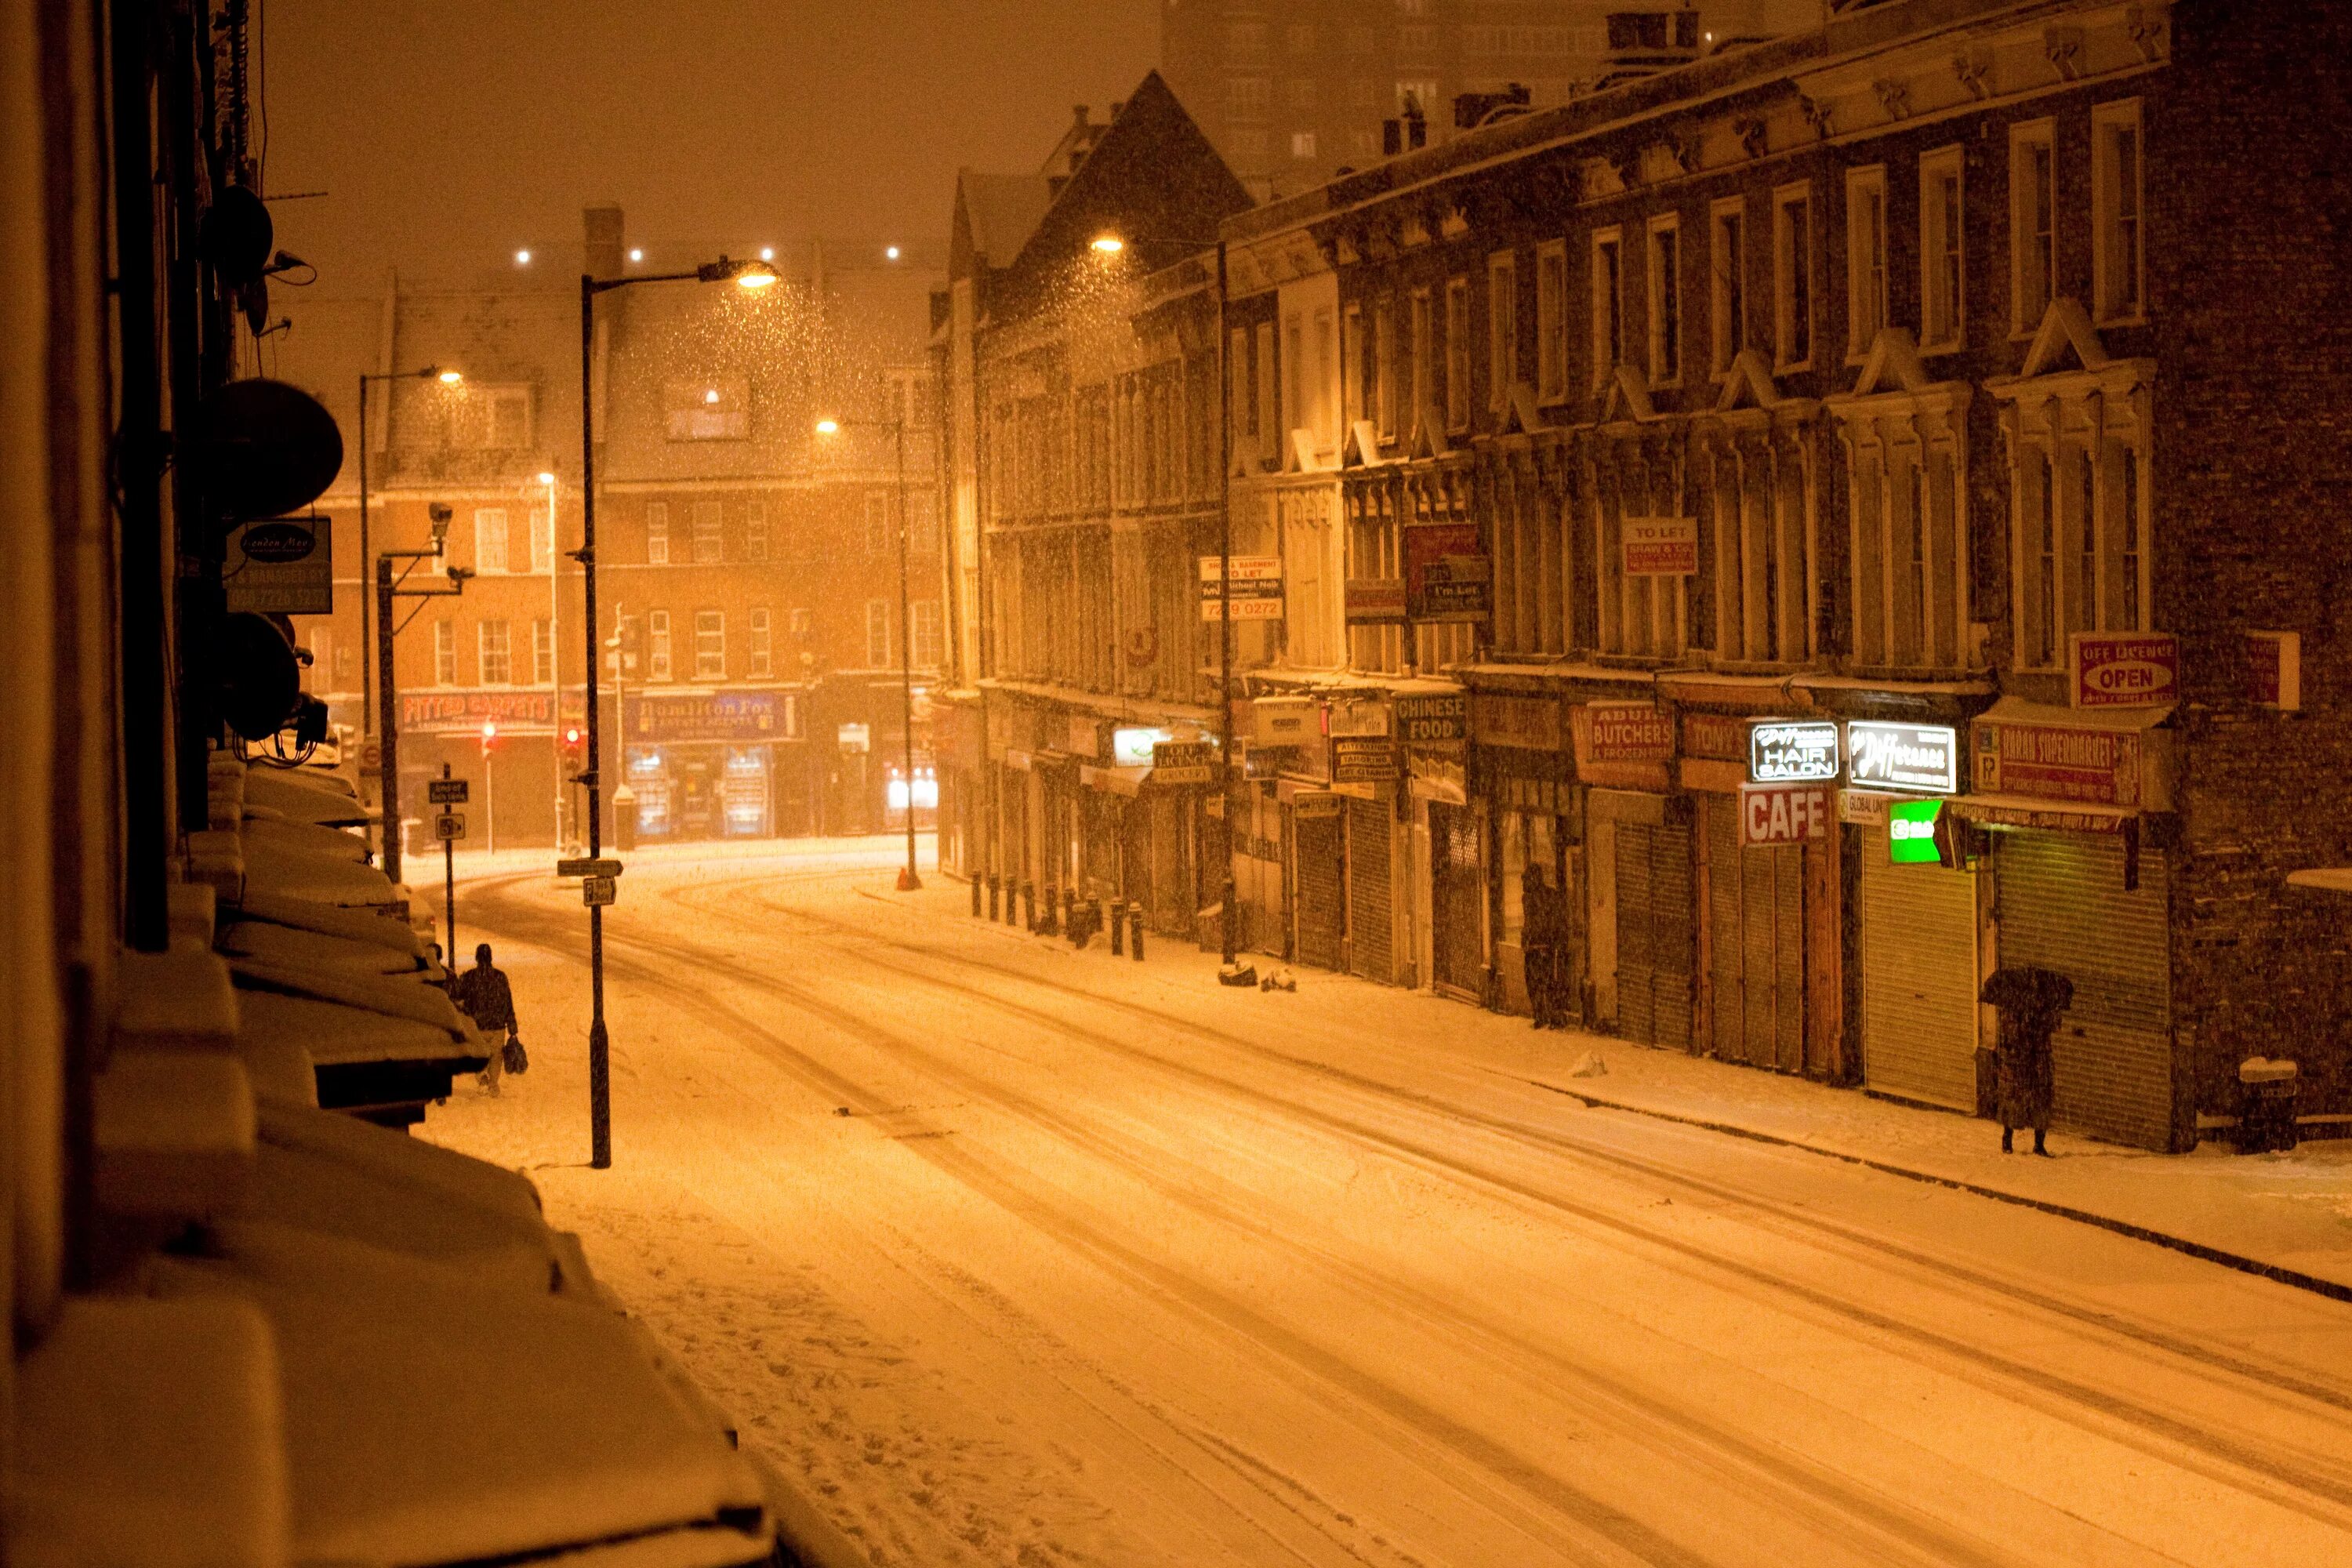 Streets rus. Зимний город. Зимняя улица. Ночная зимняя улица. Зимняя ночь в городе.